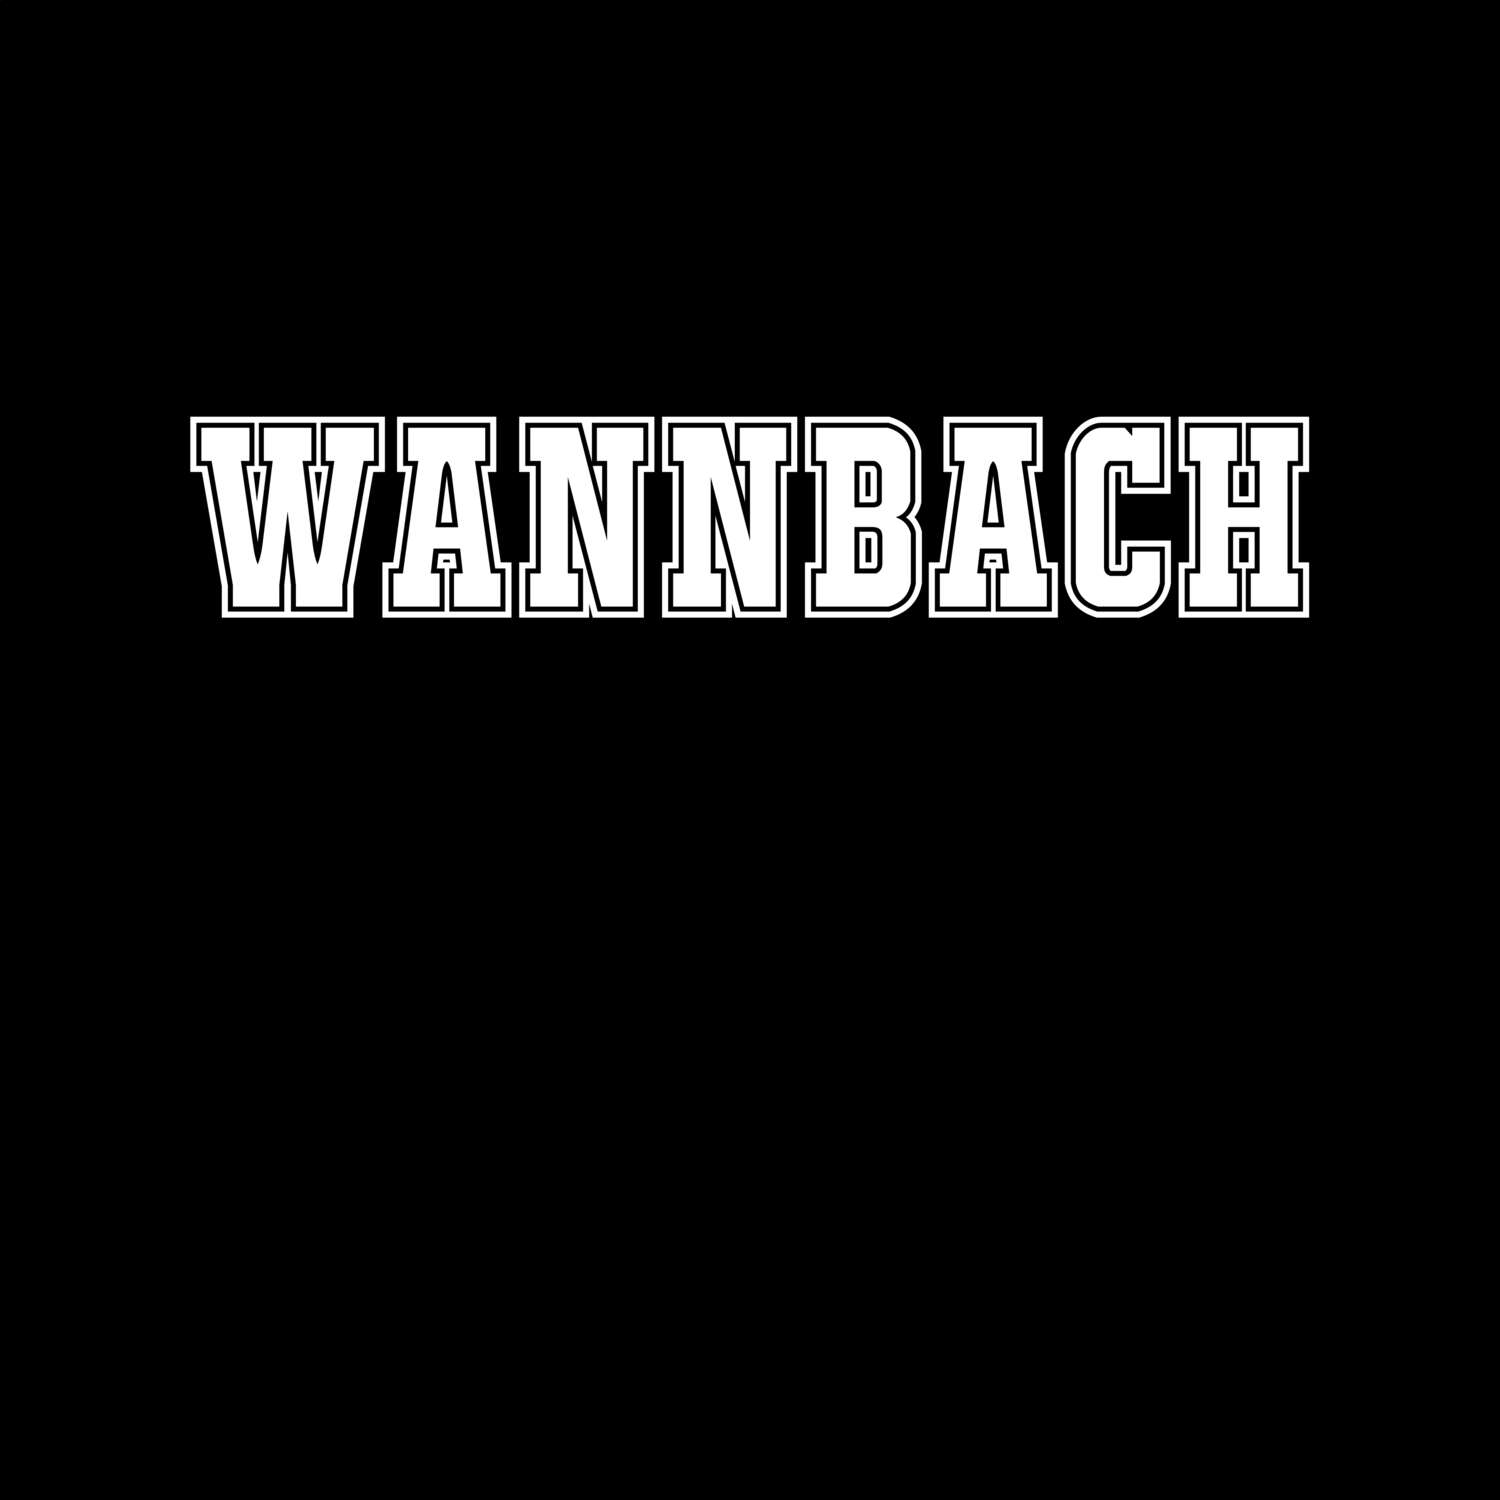 Wannbach T-Shirt »Classic«